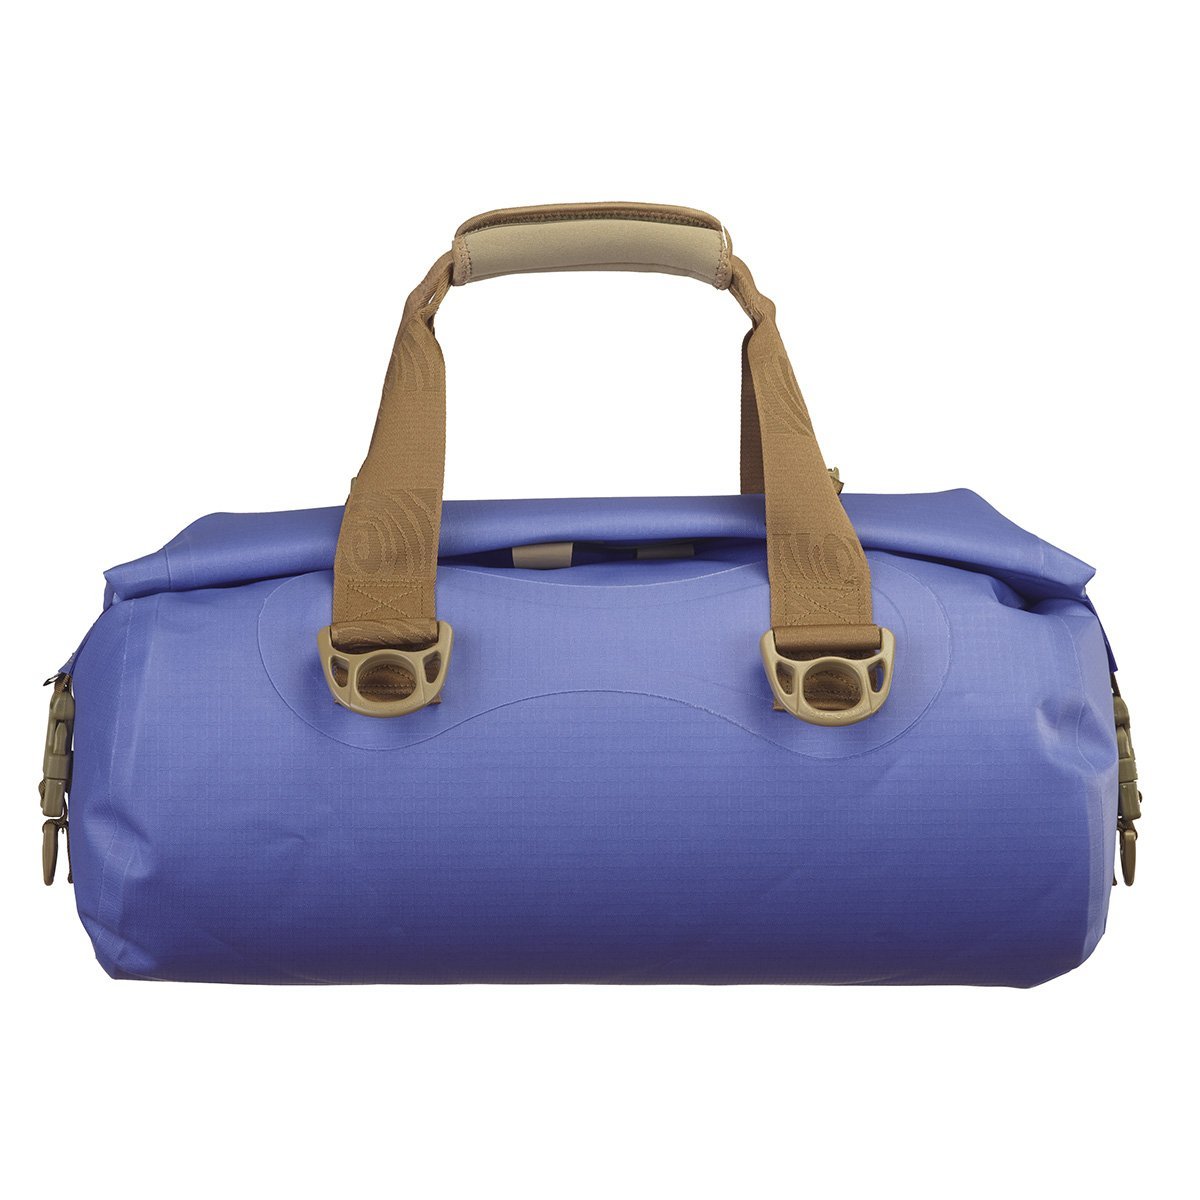 Waterproof Bum Bag | Overboard Pro-Light Waist Pack | DryBags.co.uk ...